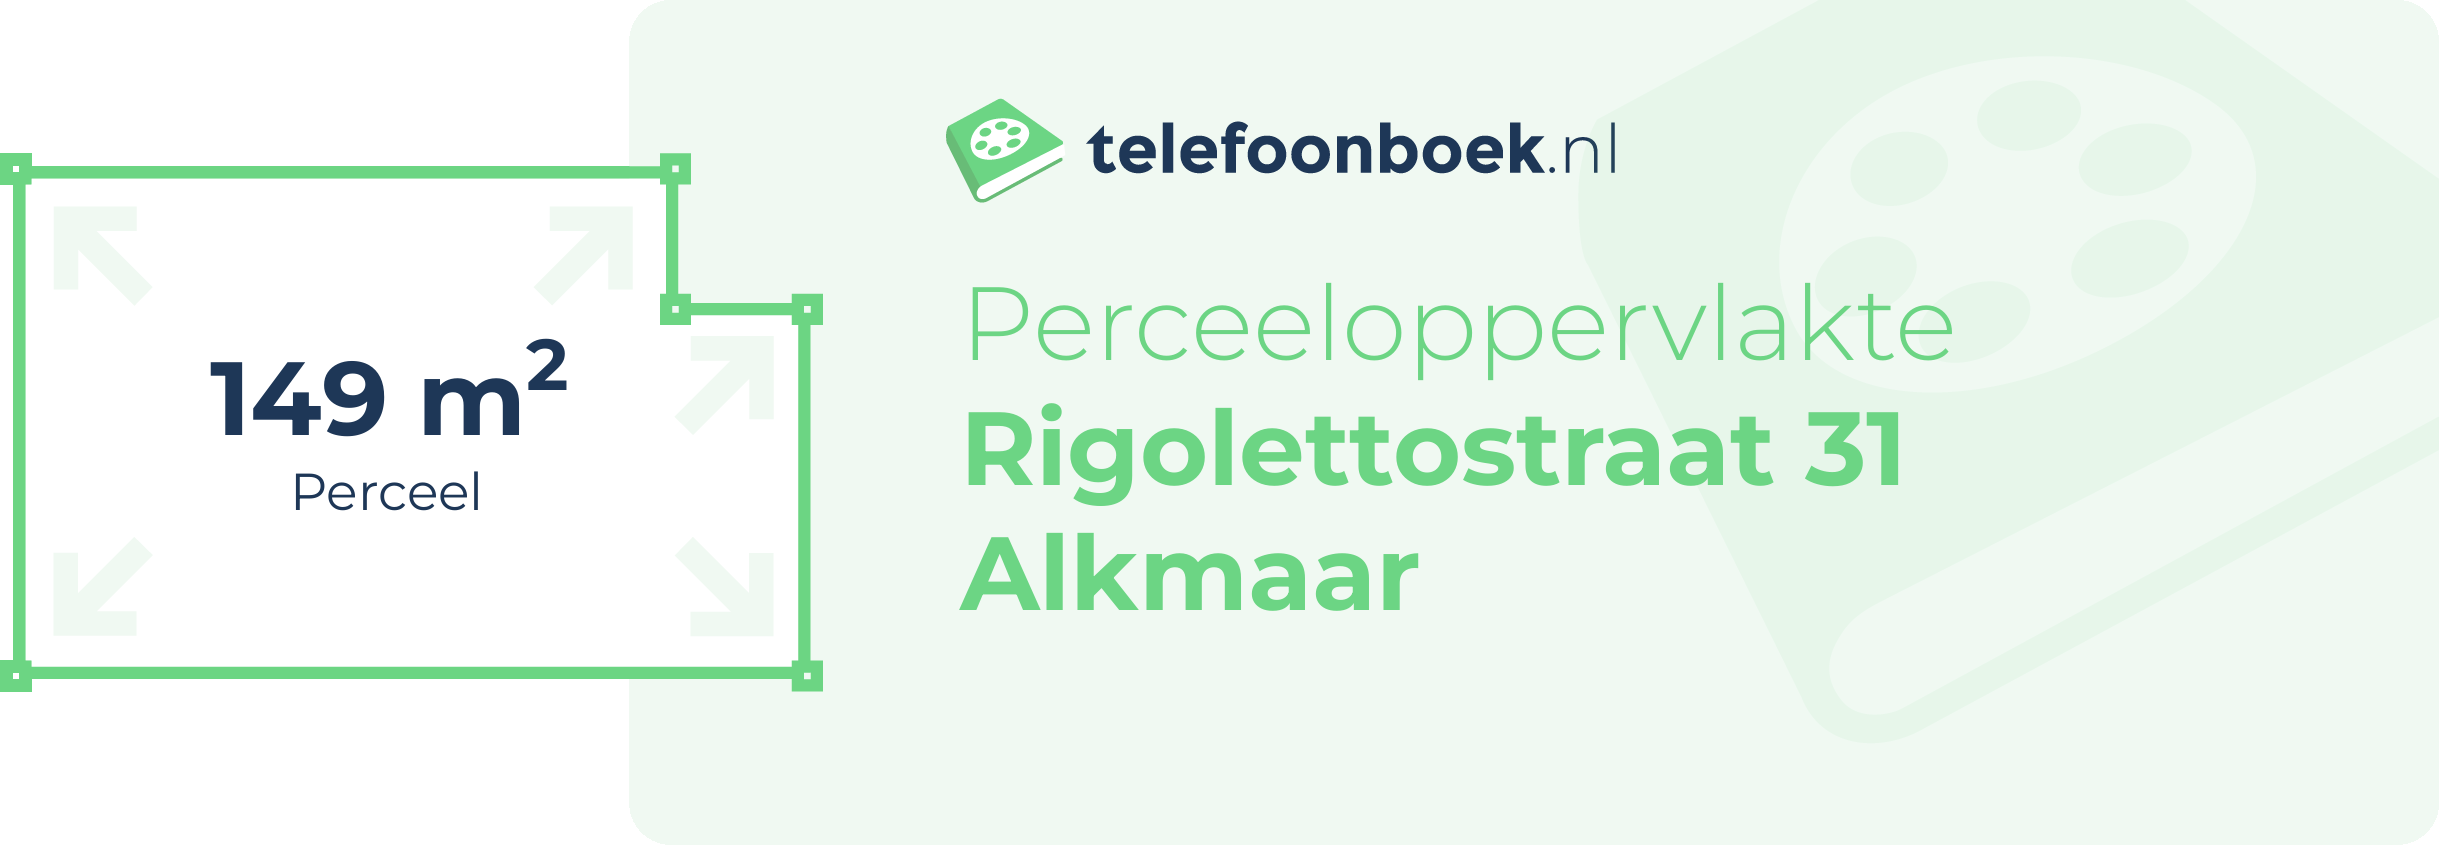 Perceeloppervlakte Rigolettostraat 31 Alkmaar